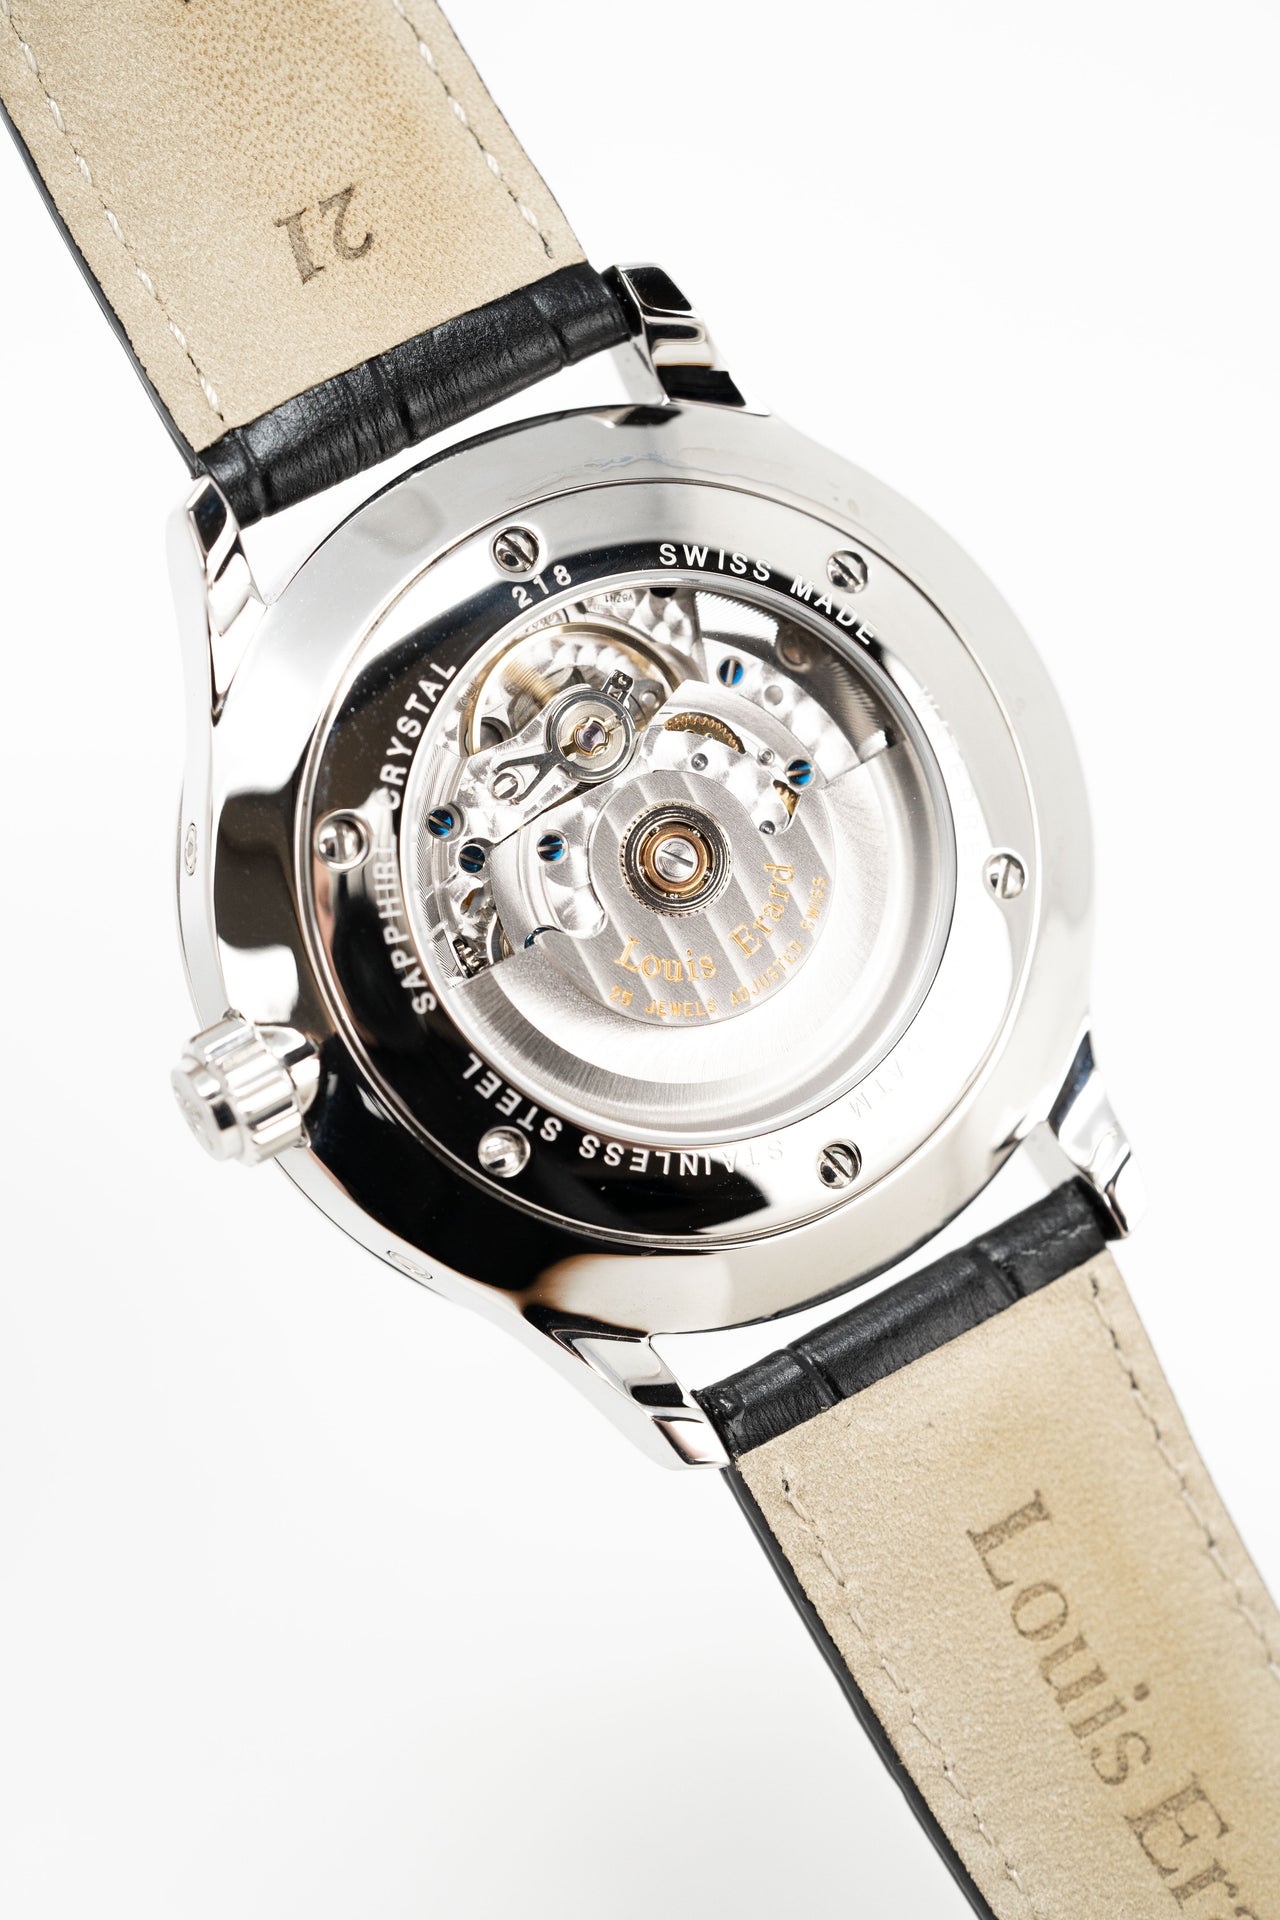 Louis Erard 1931 Dual Time Automatic Men's Watch 82 224 AA01 + Box